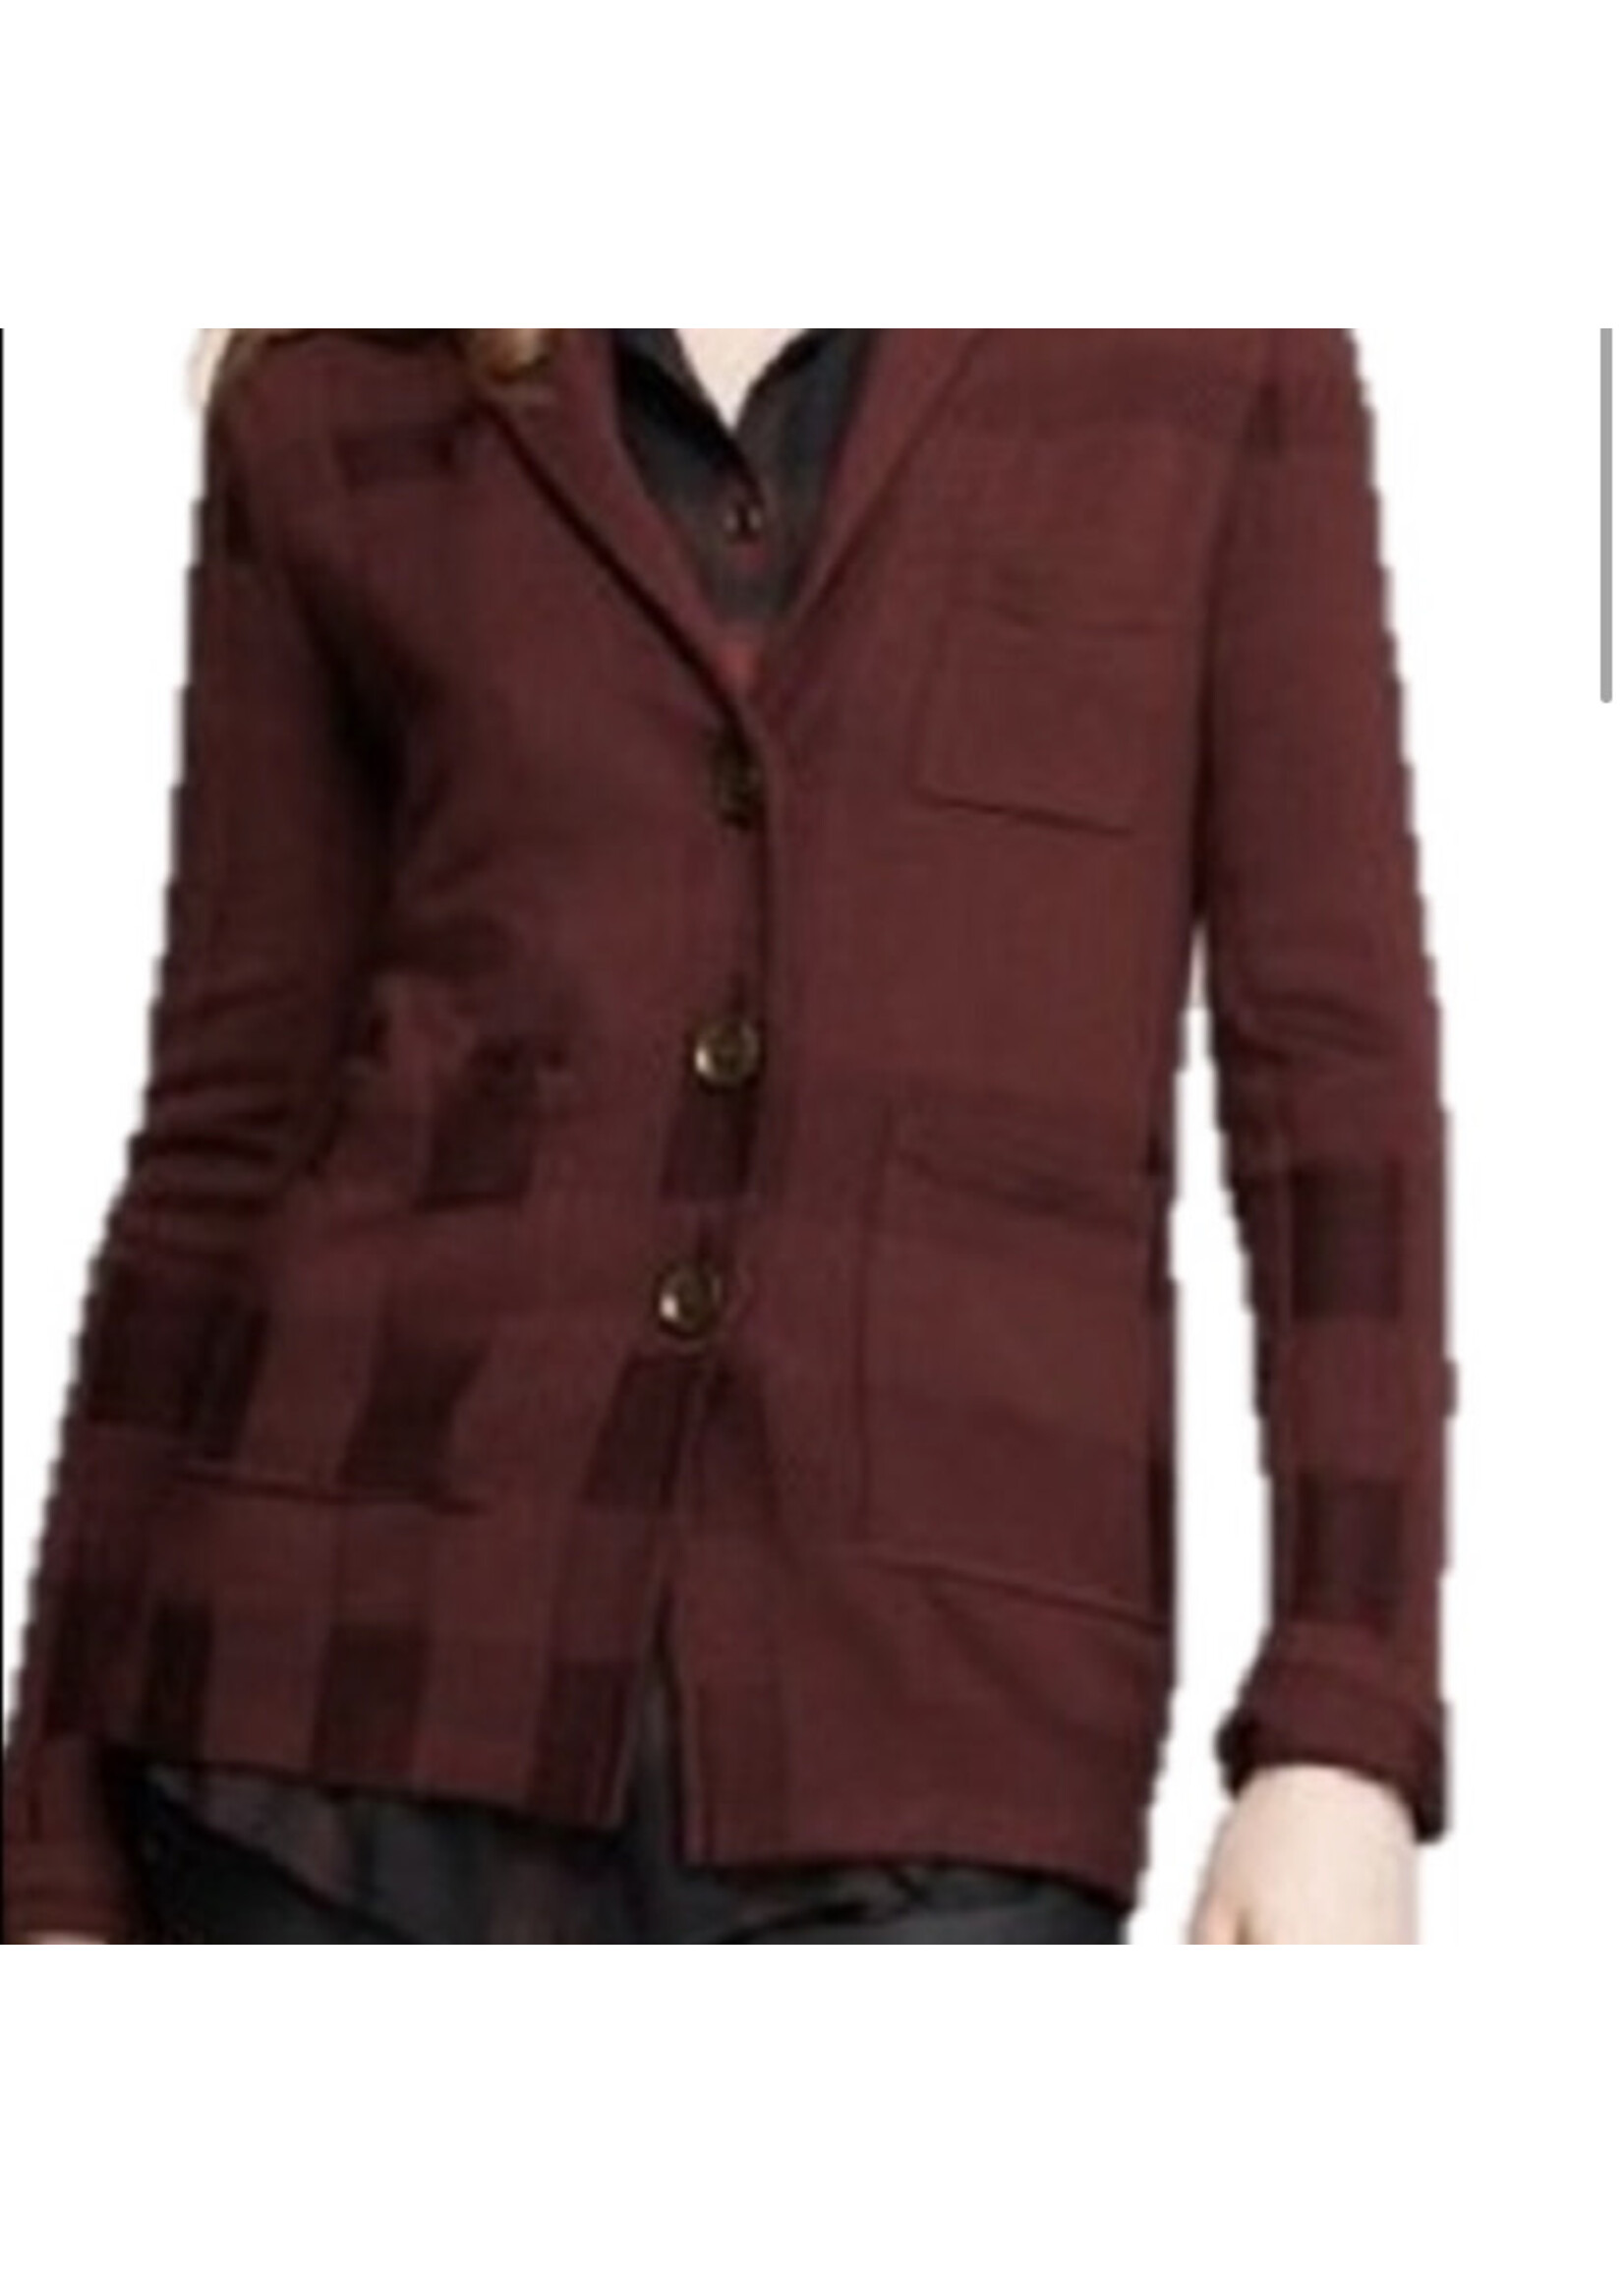 Burberry Brit Wool/Silk Sweater, XL